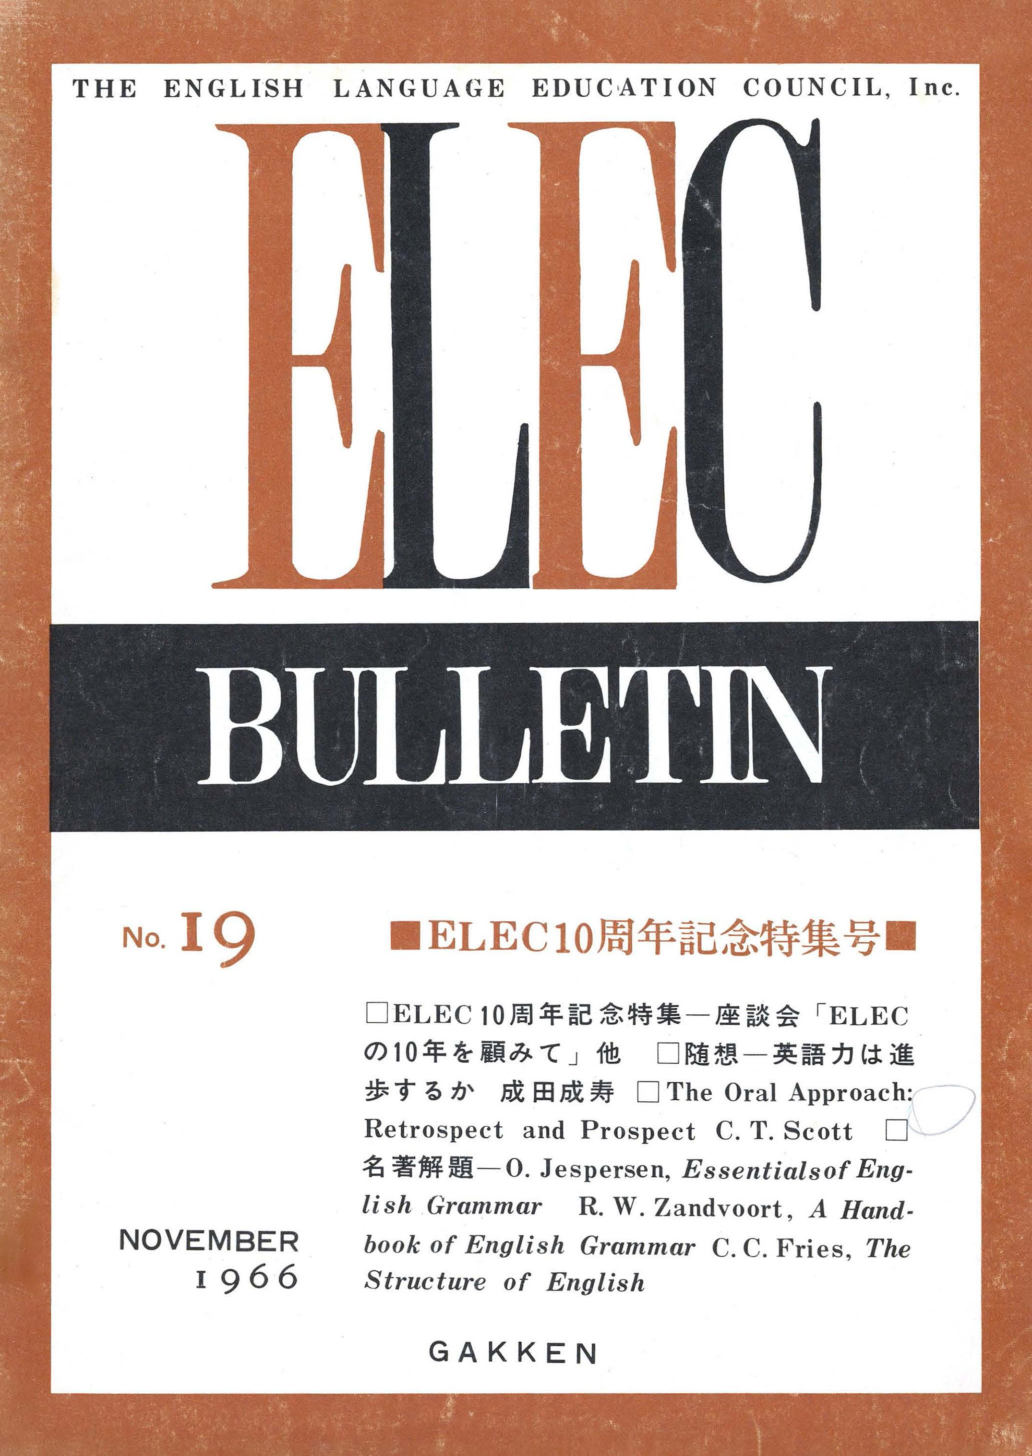 ELEC BULLETIN No. 19　■ELEC10周年記念特集号■ November 1966